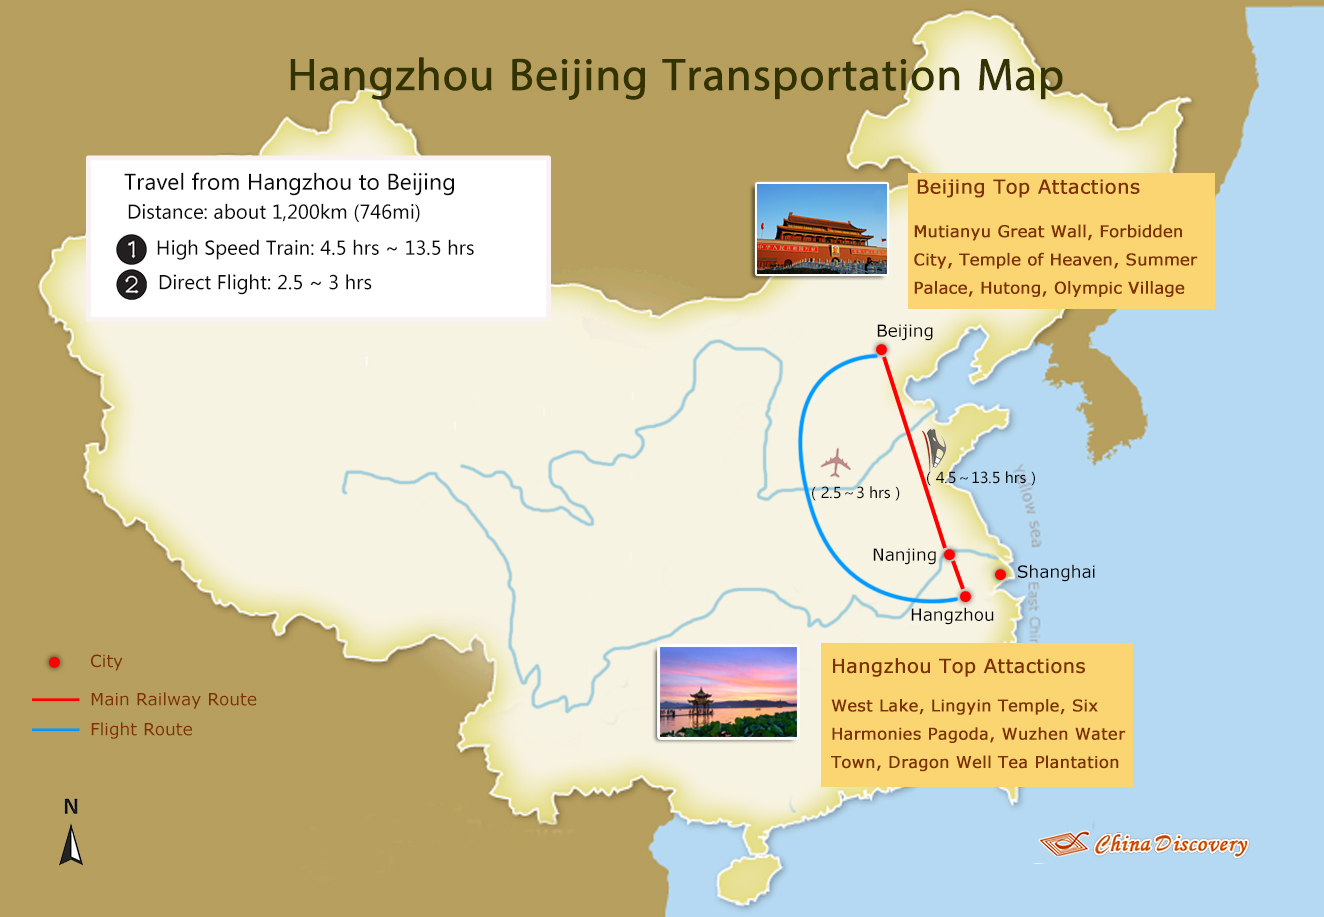 Travel from Hangzhou to Beijing